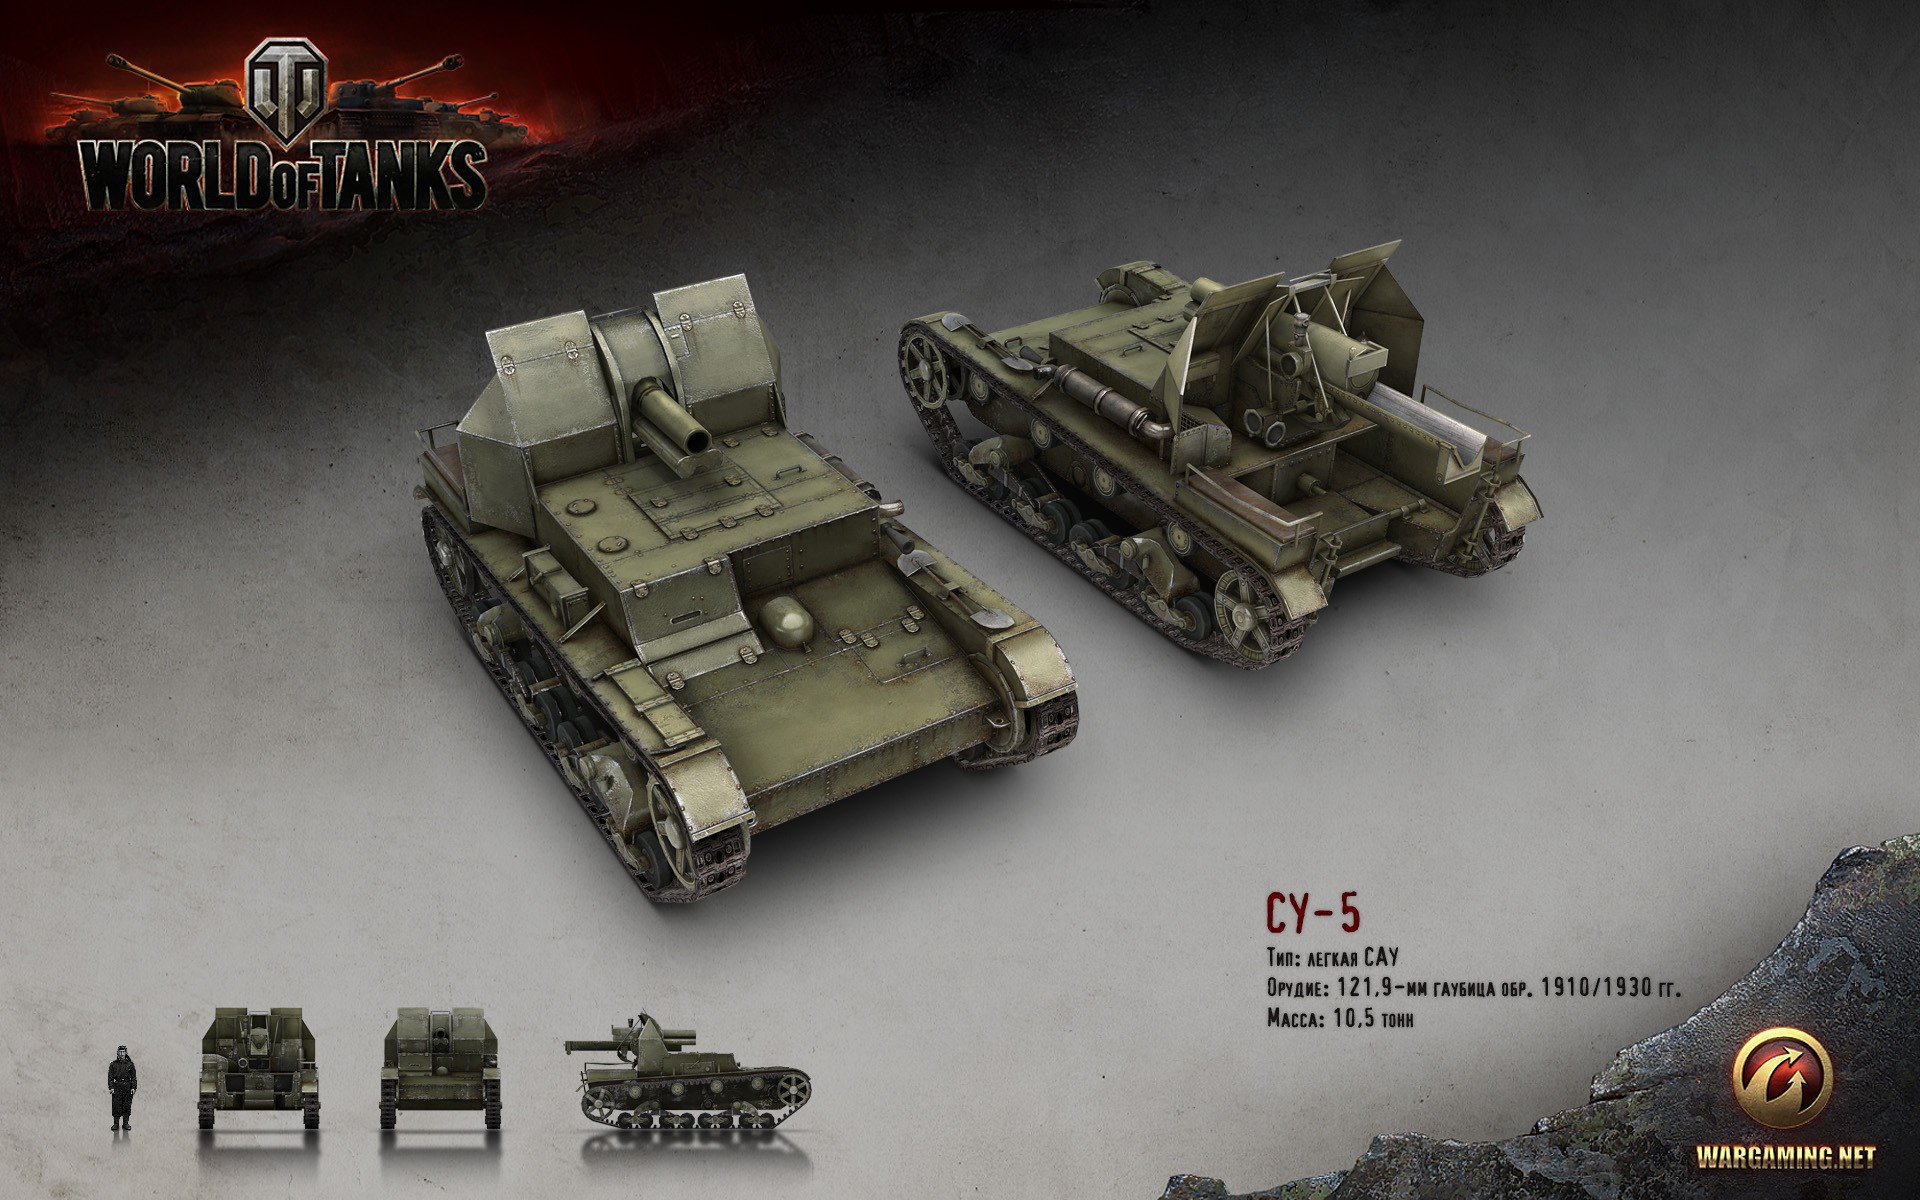 Light the SU-5 game World of Tanks